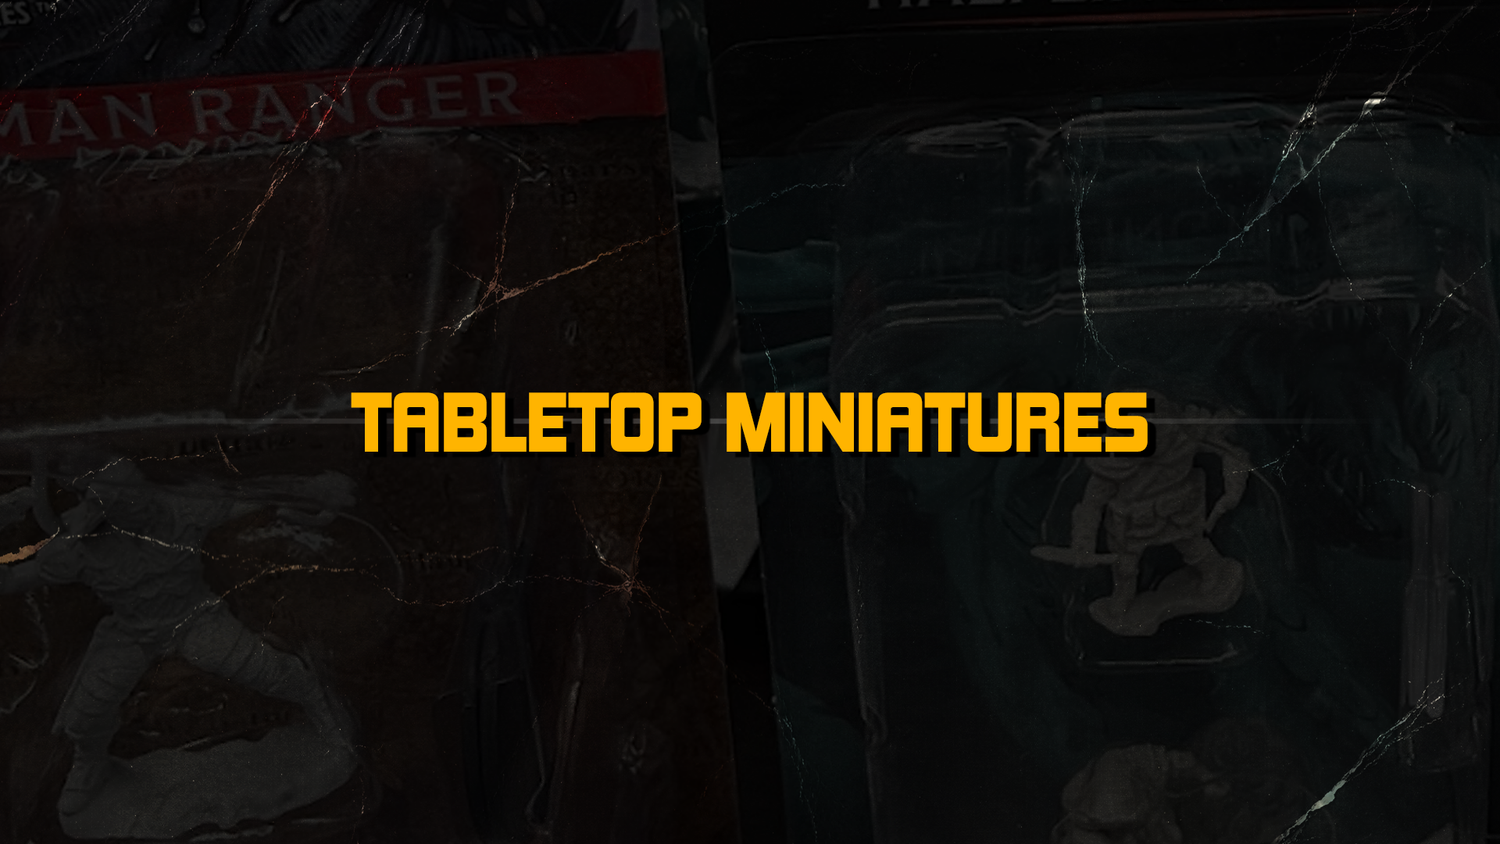 Tabletop Miniatures